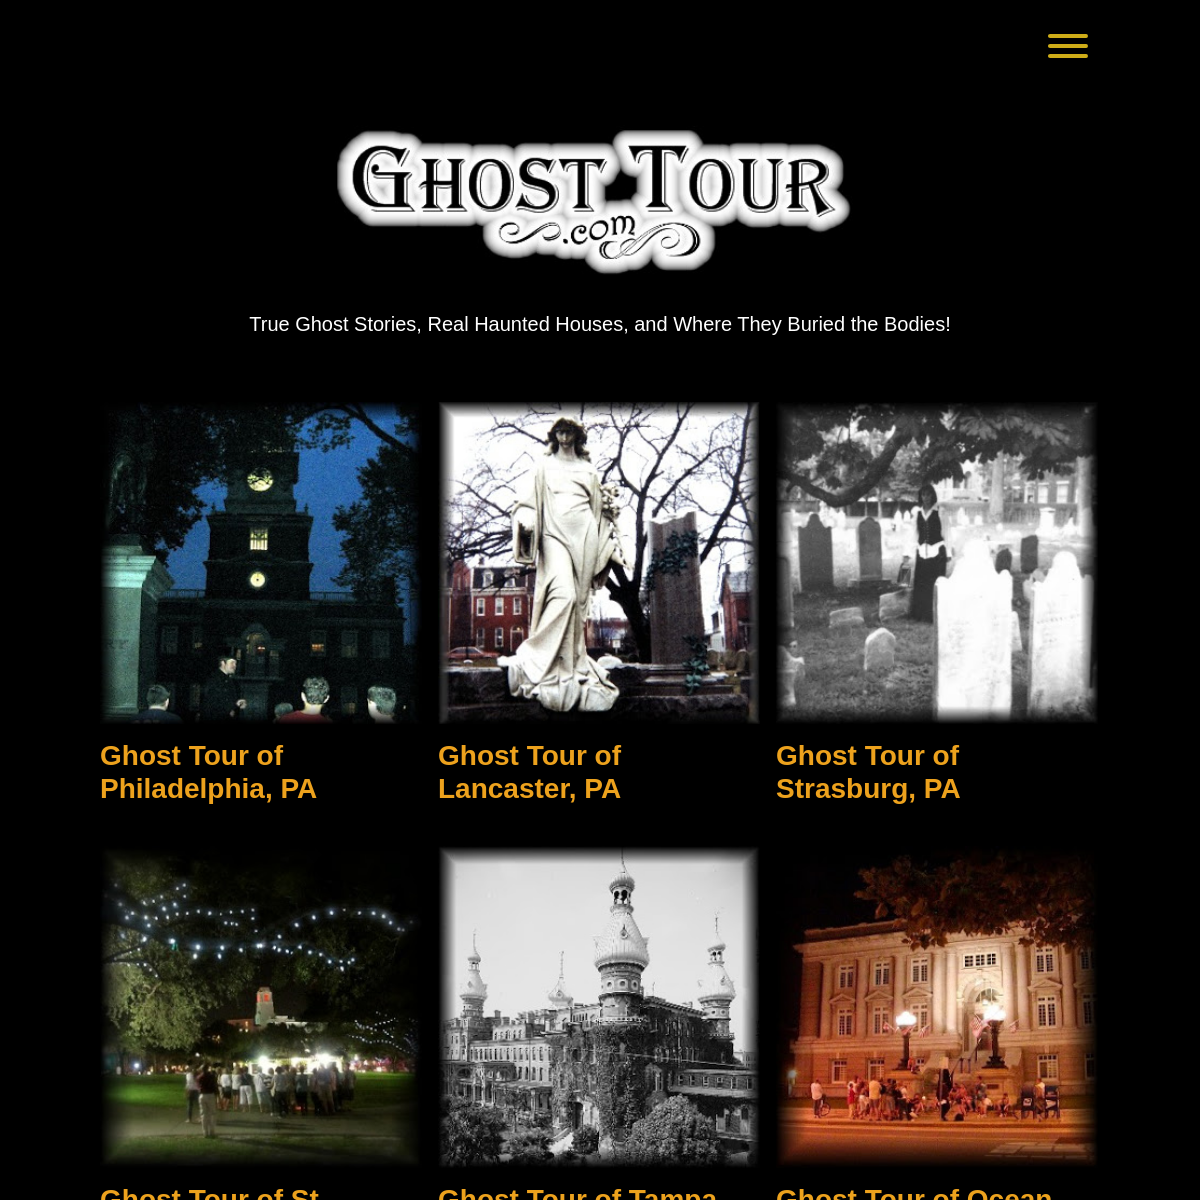 A complete backup of ghosttour.com